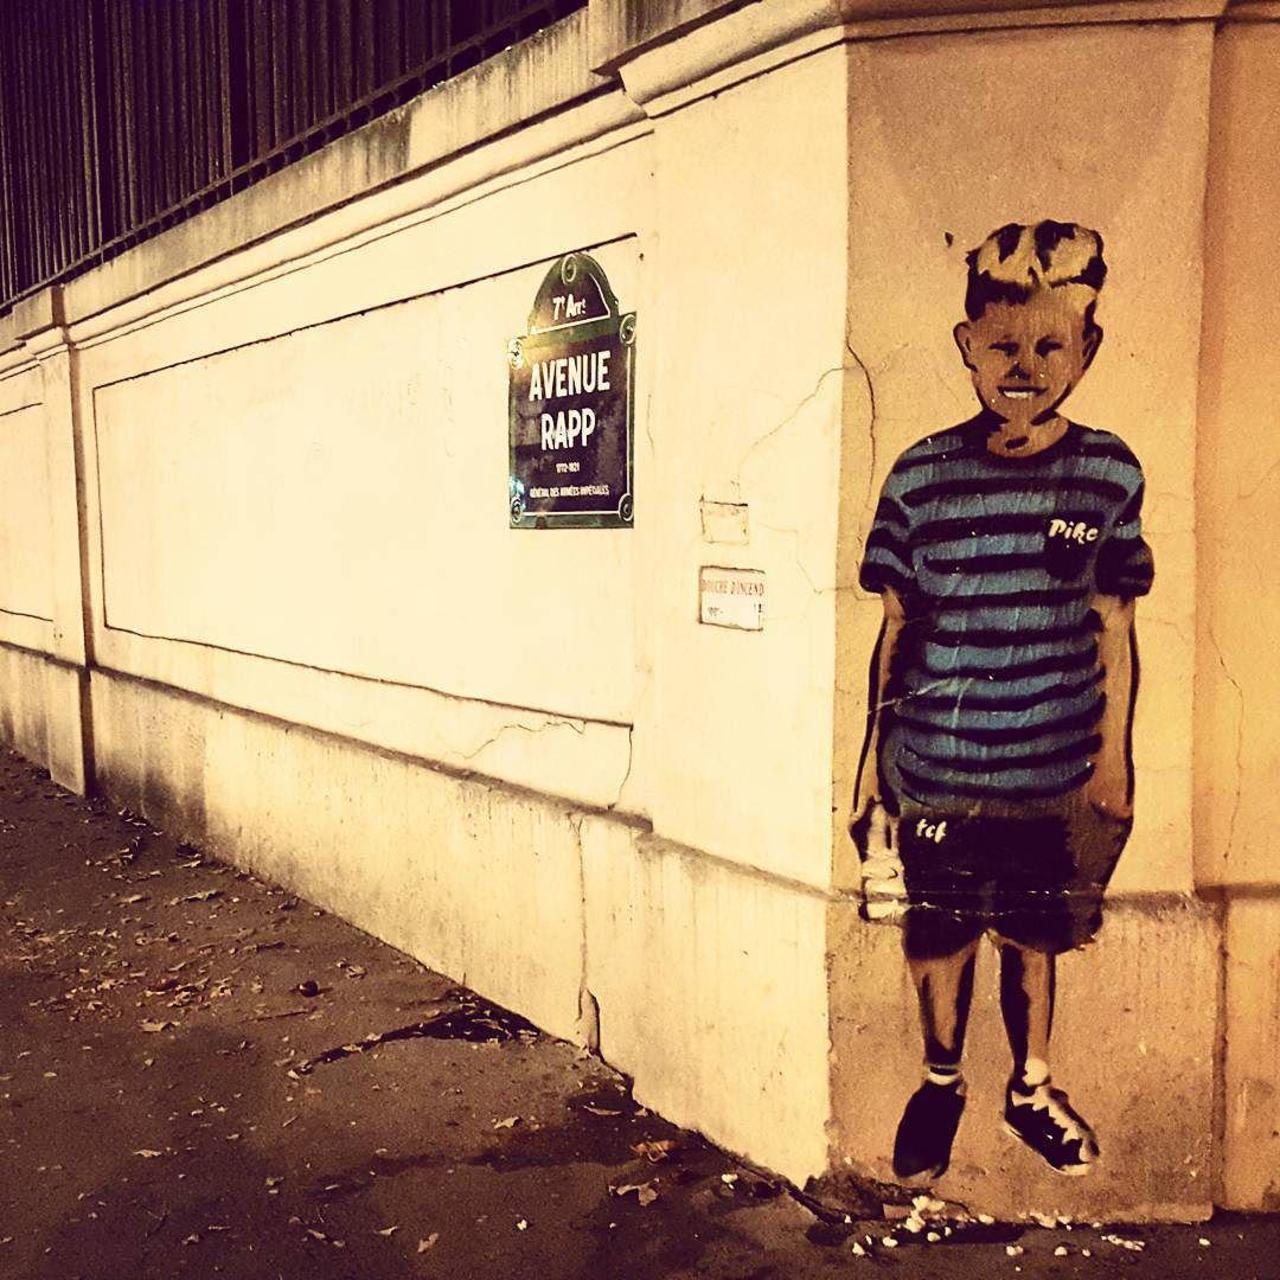 #Paris #graffiti photo by @the169 http://ift.tt/1QSvwso #StreetArt http://t.co/xnJ1X3HM0D